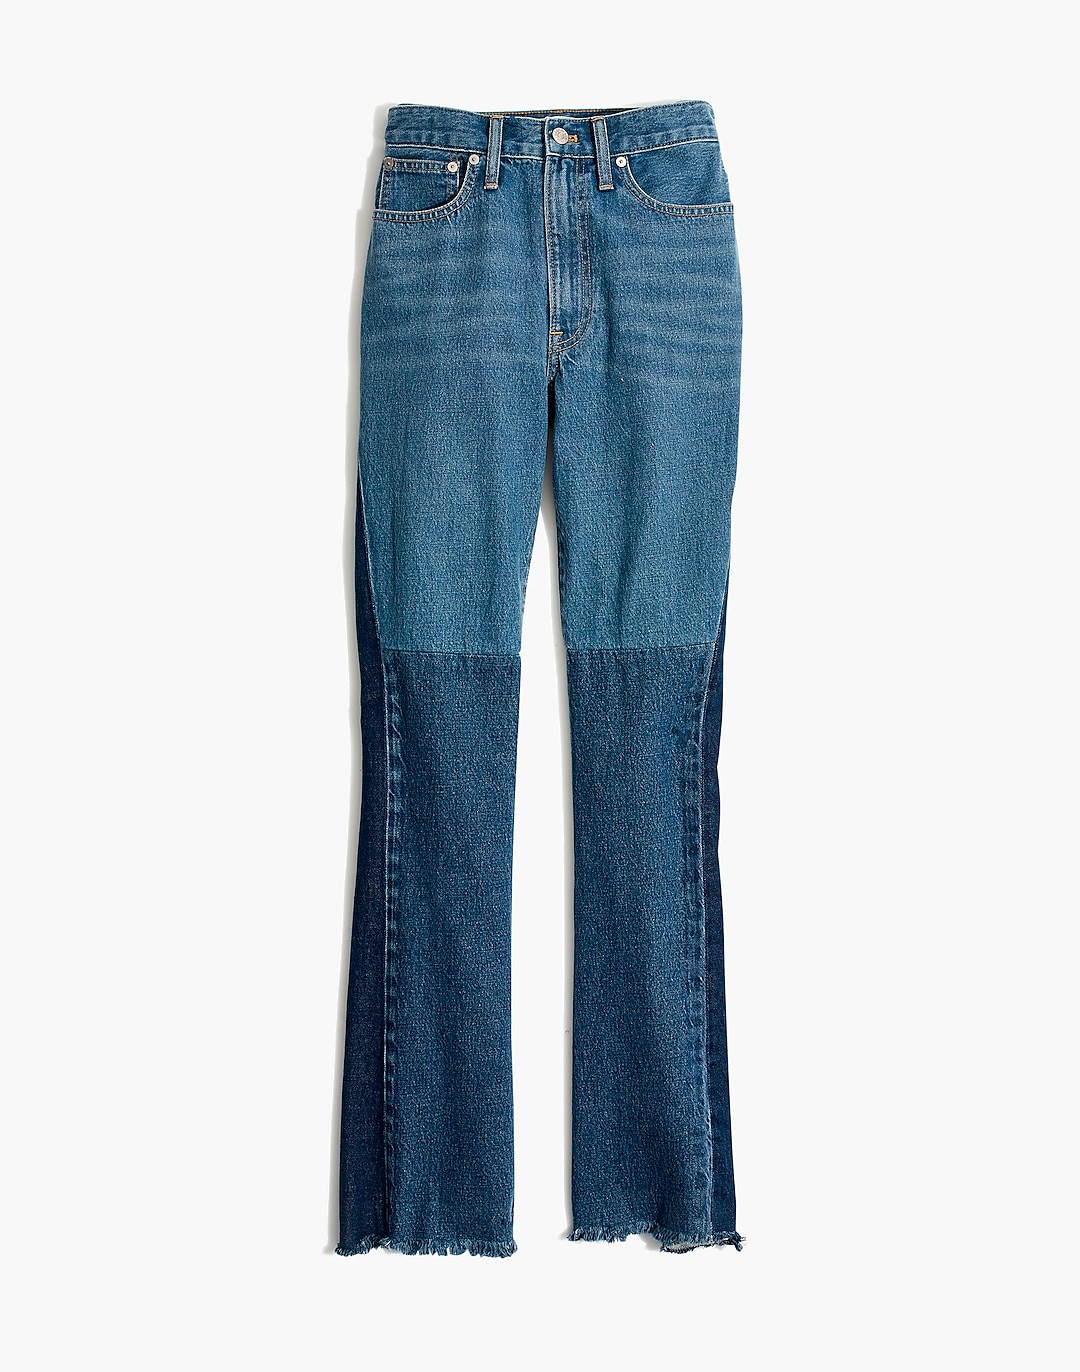 Madewell x ISKO™ Patchwork Rigid Flare Jeans